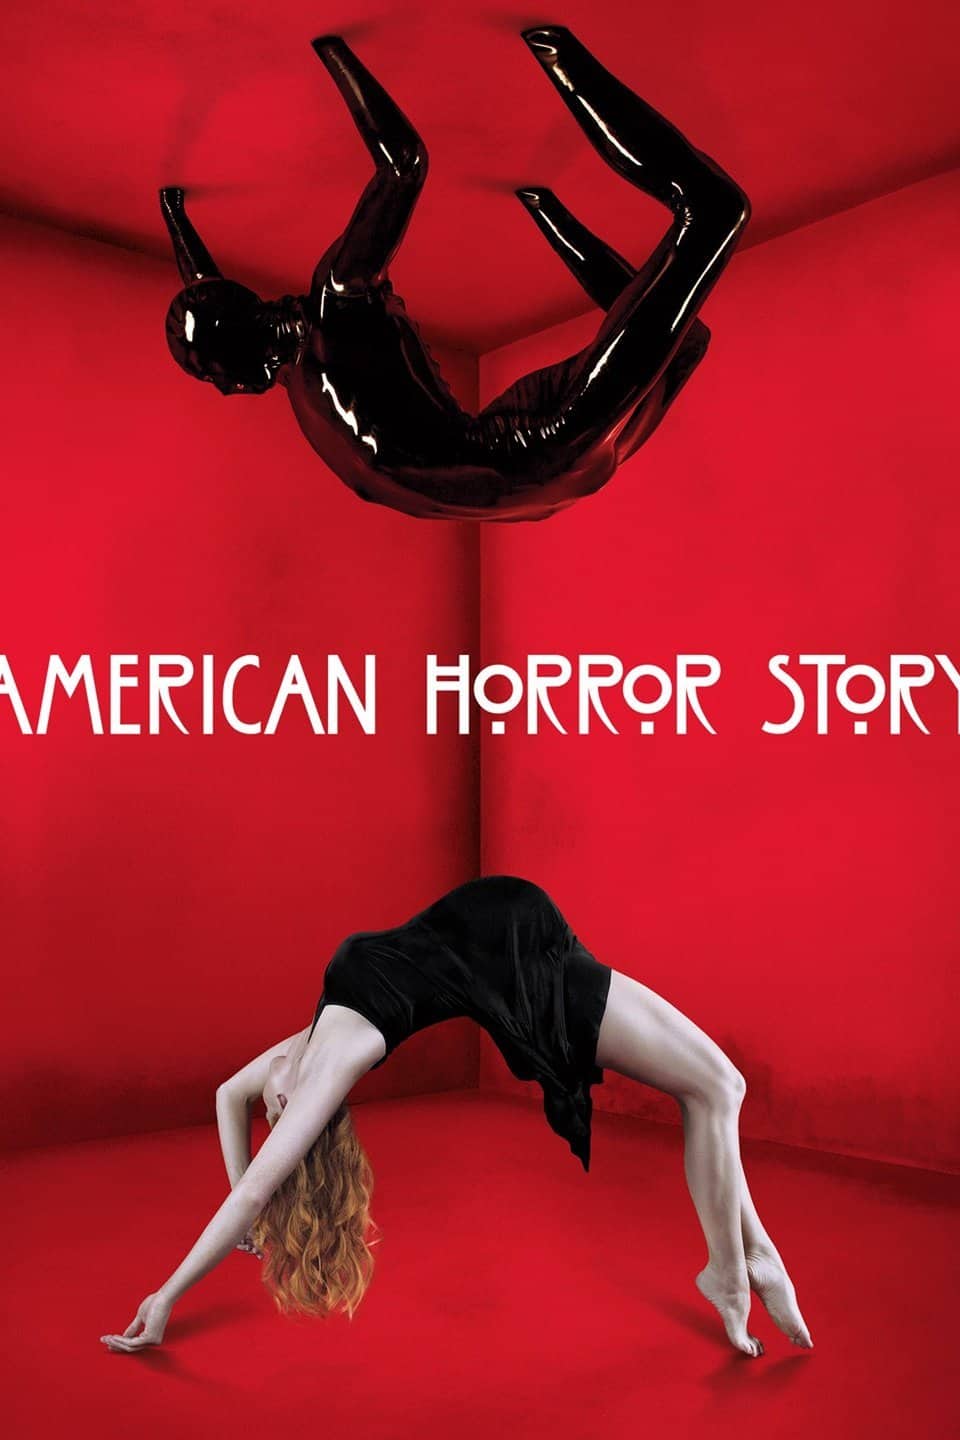 American Horror Story